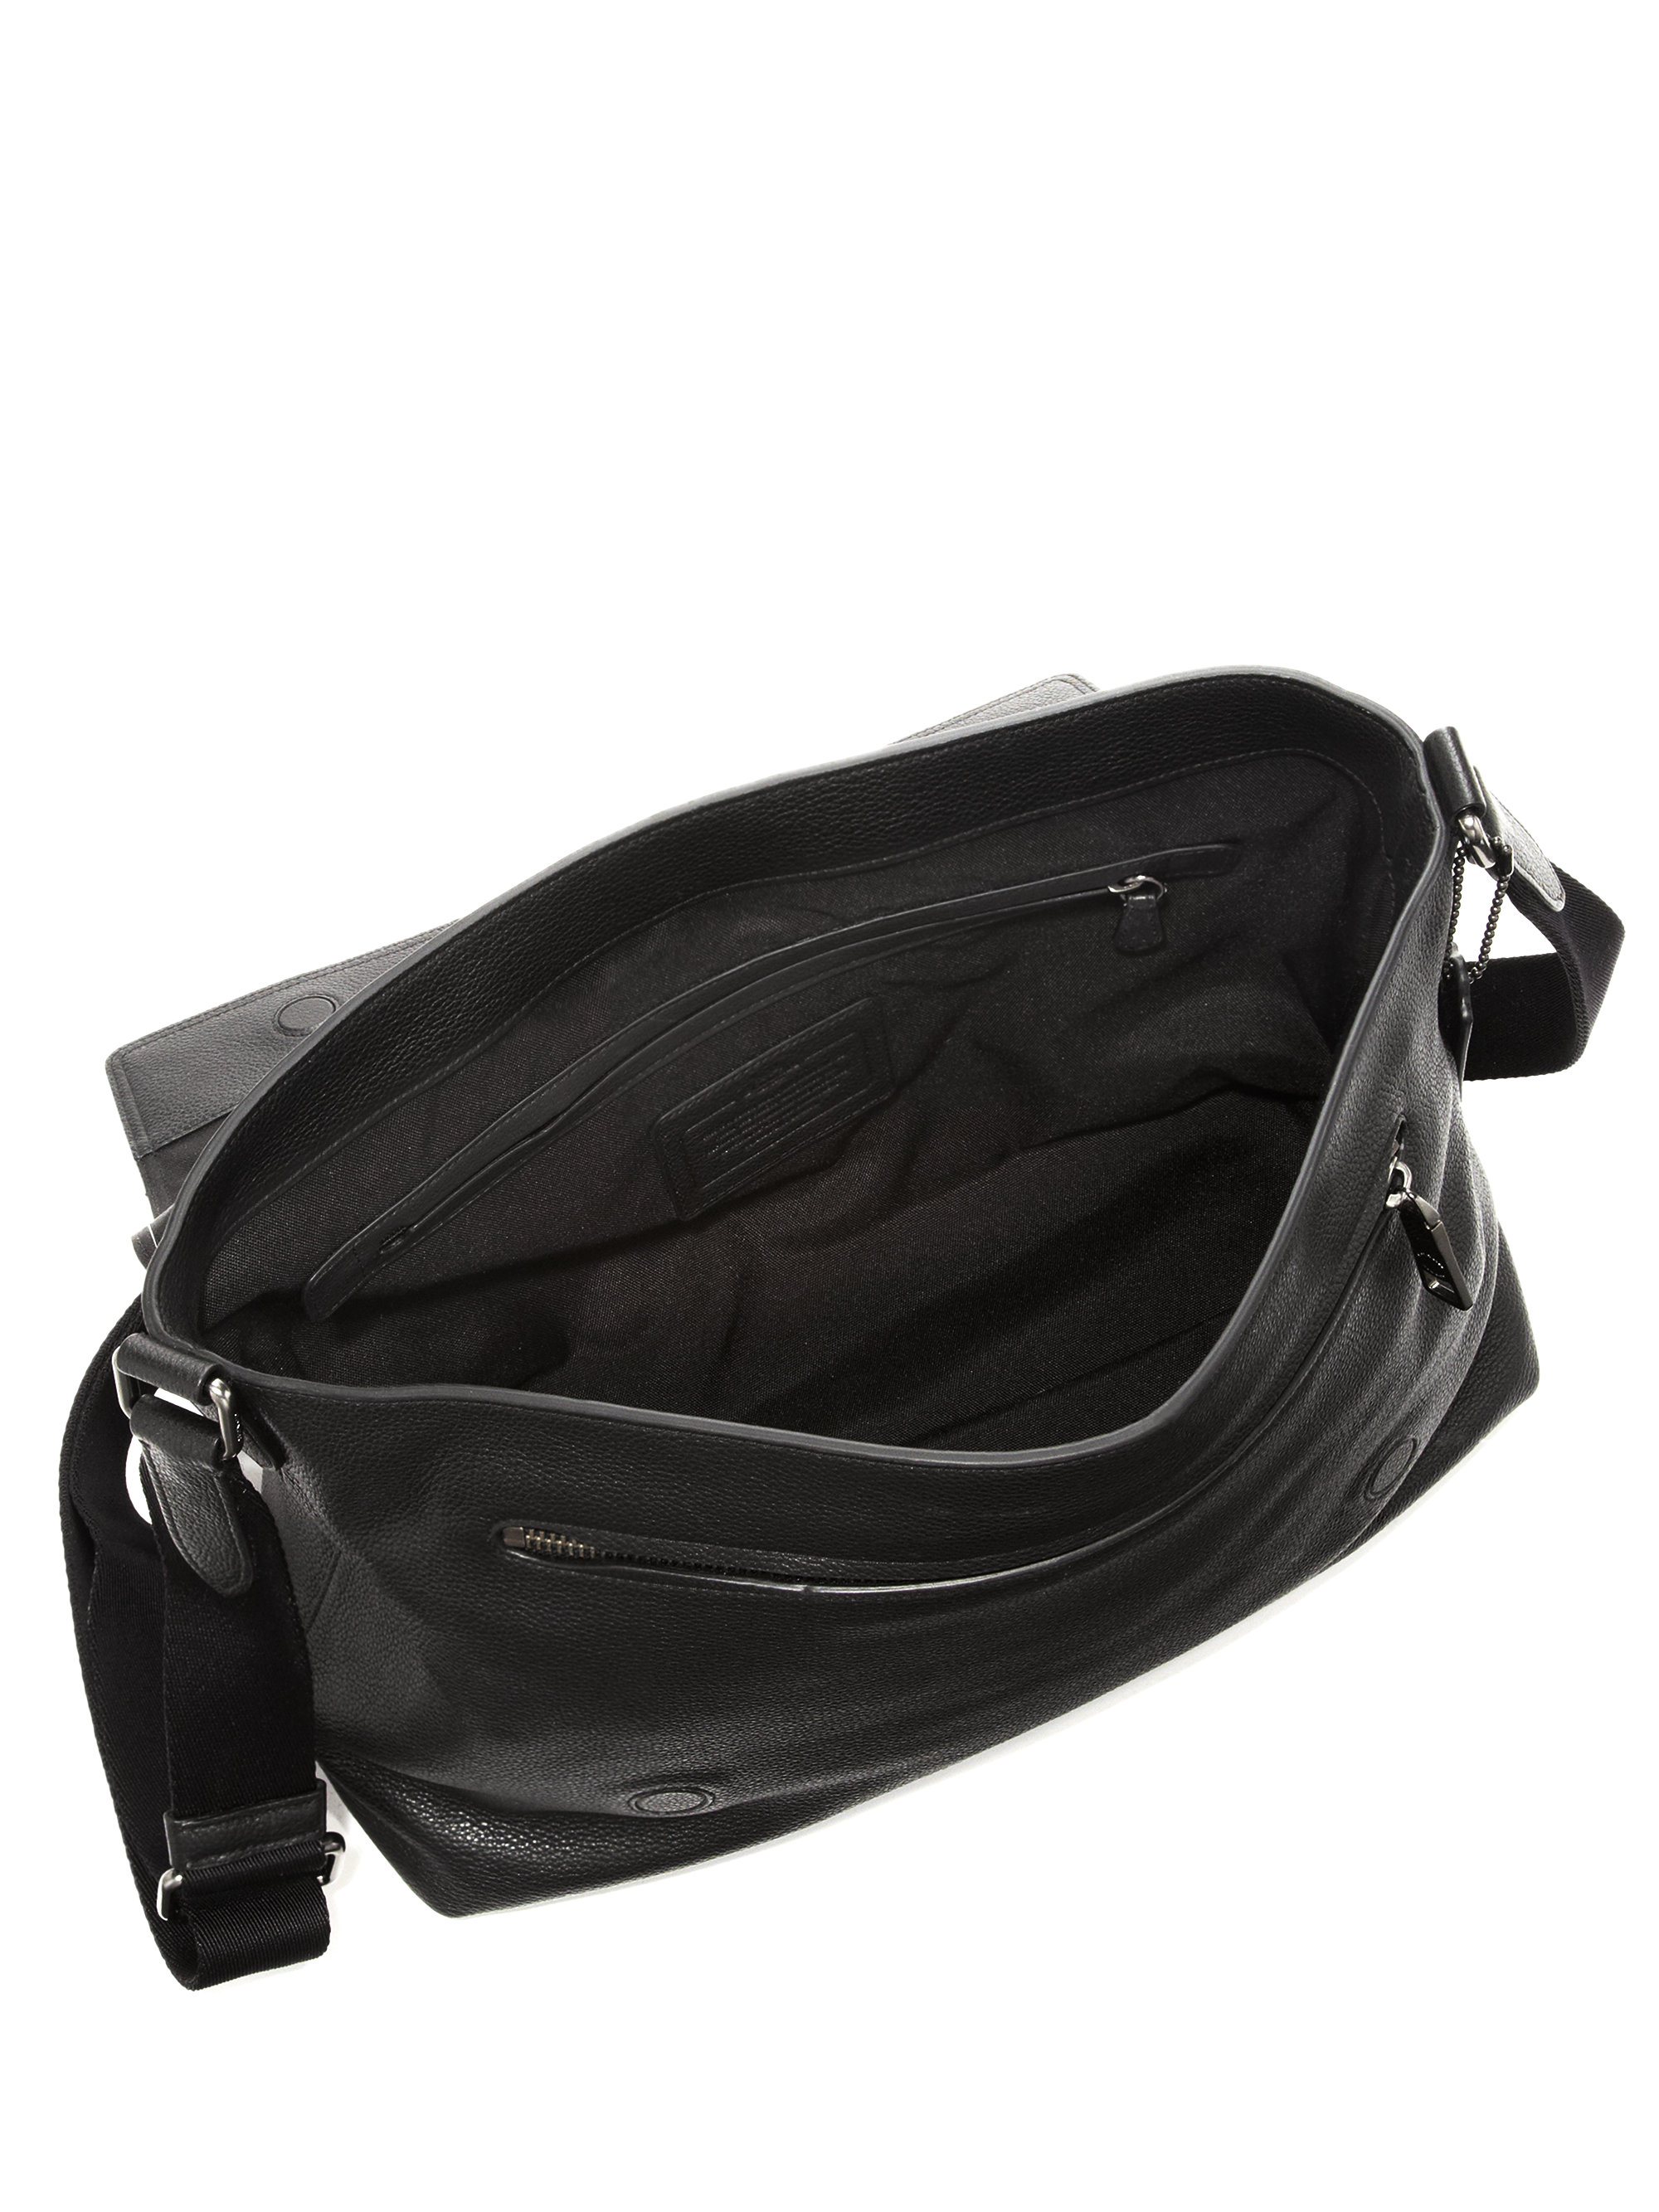 Coach Sullivan Leather Messenger Bag in Black for Men | Lyst